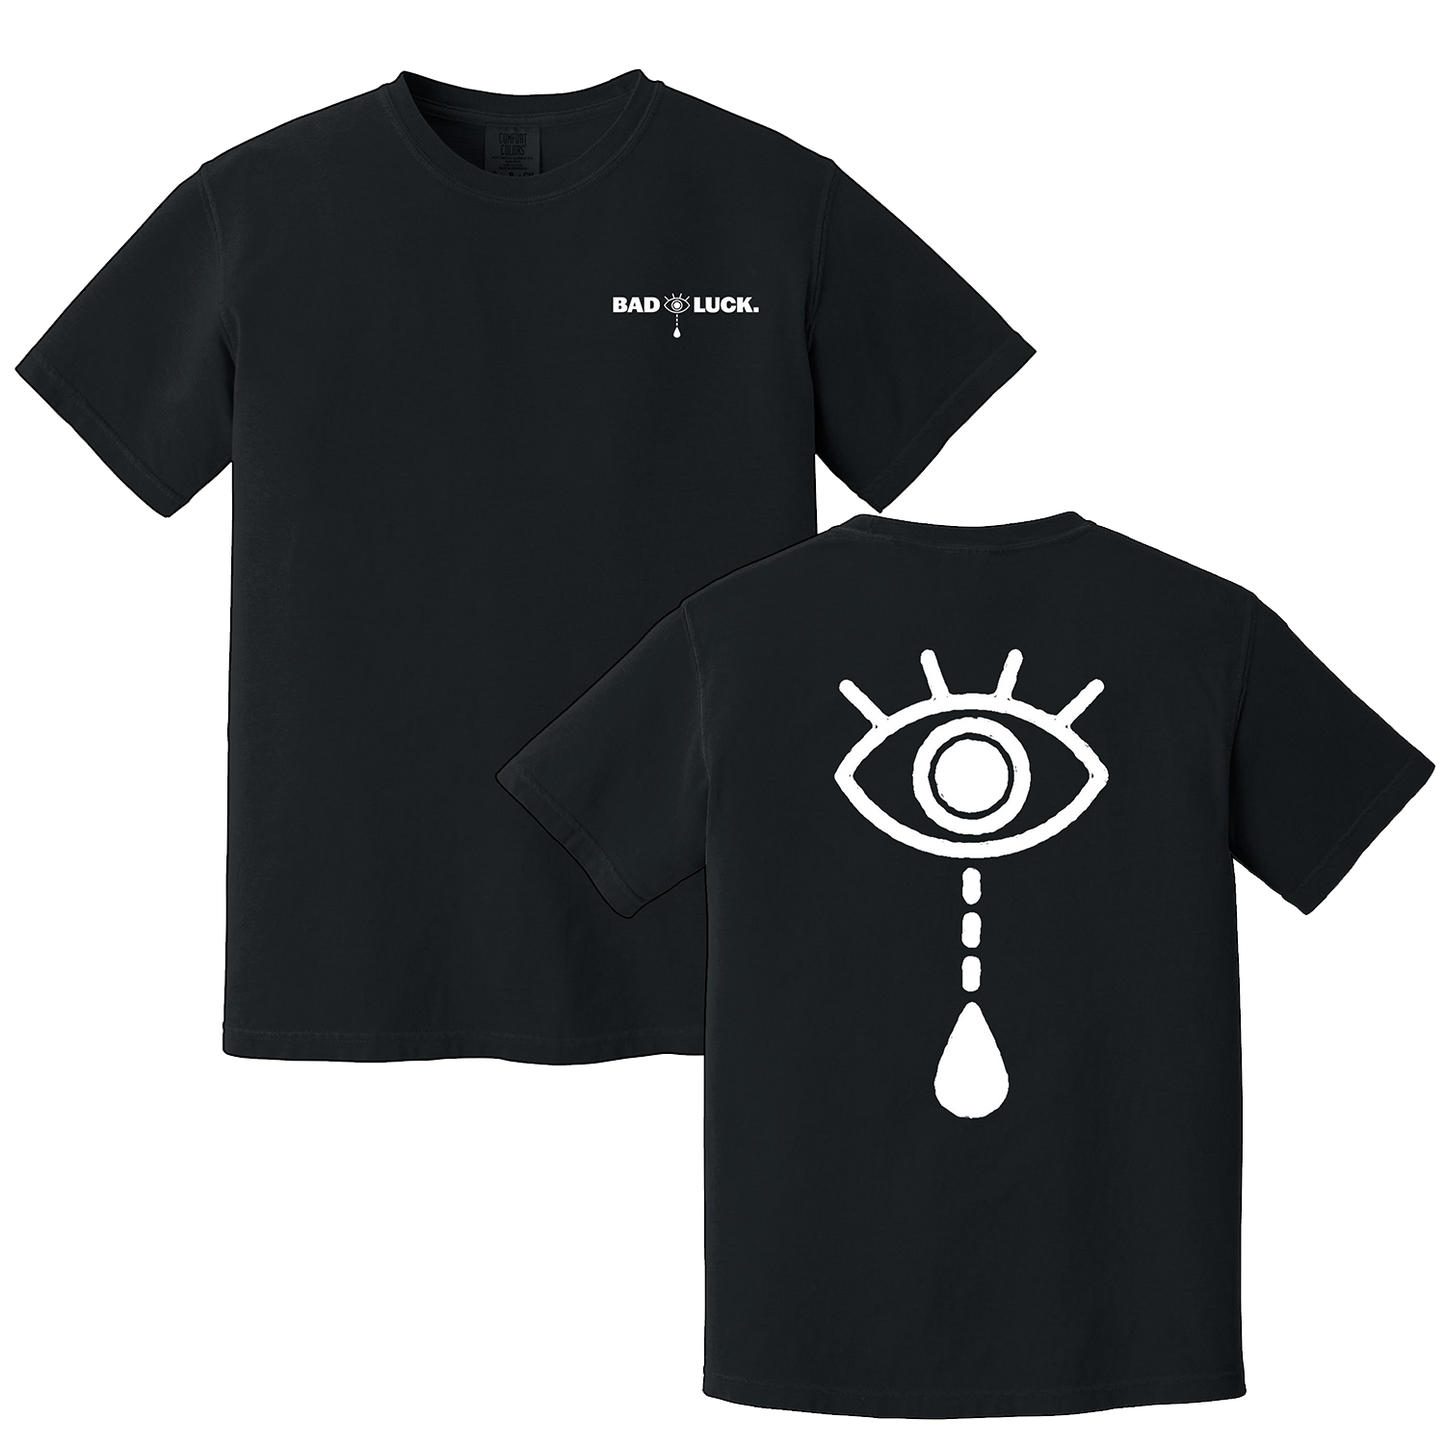 Bad Luck. - "Black Eye" T-Shirt